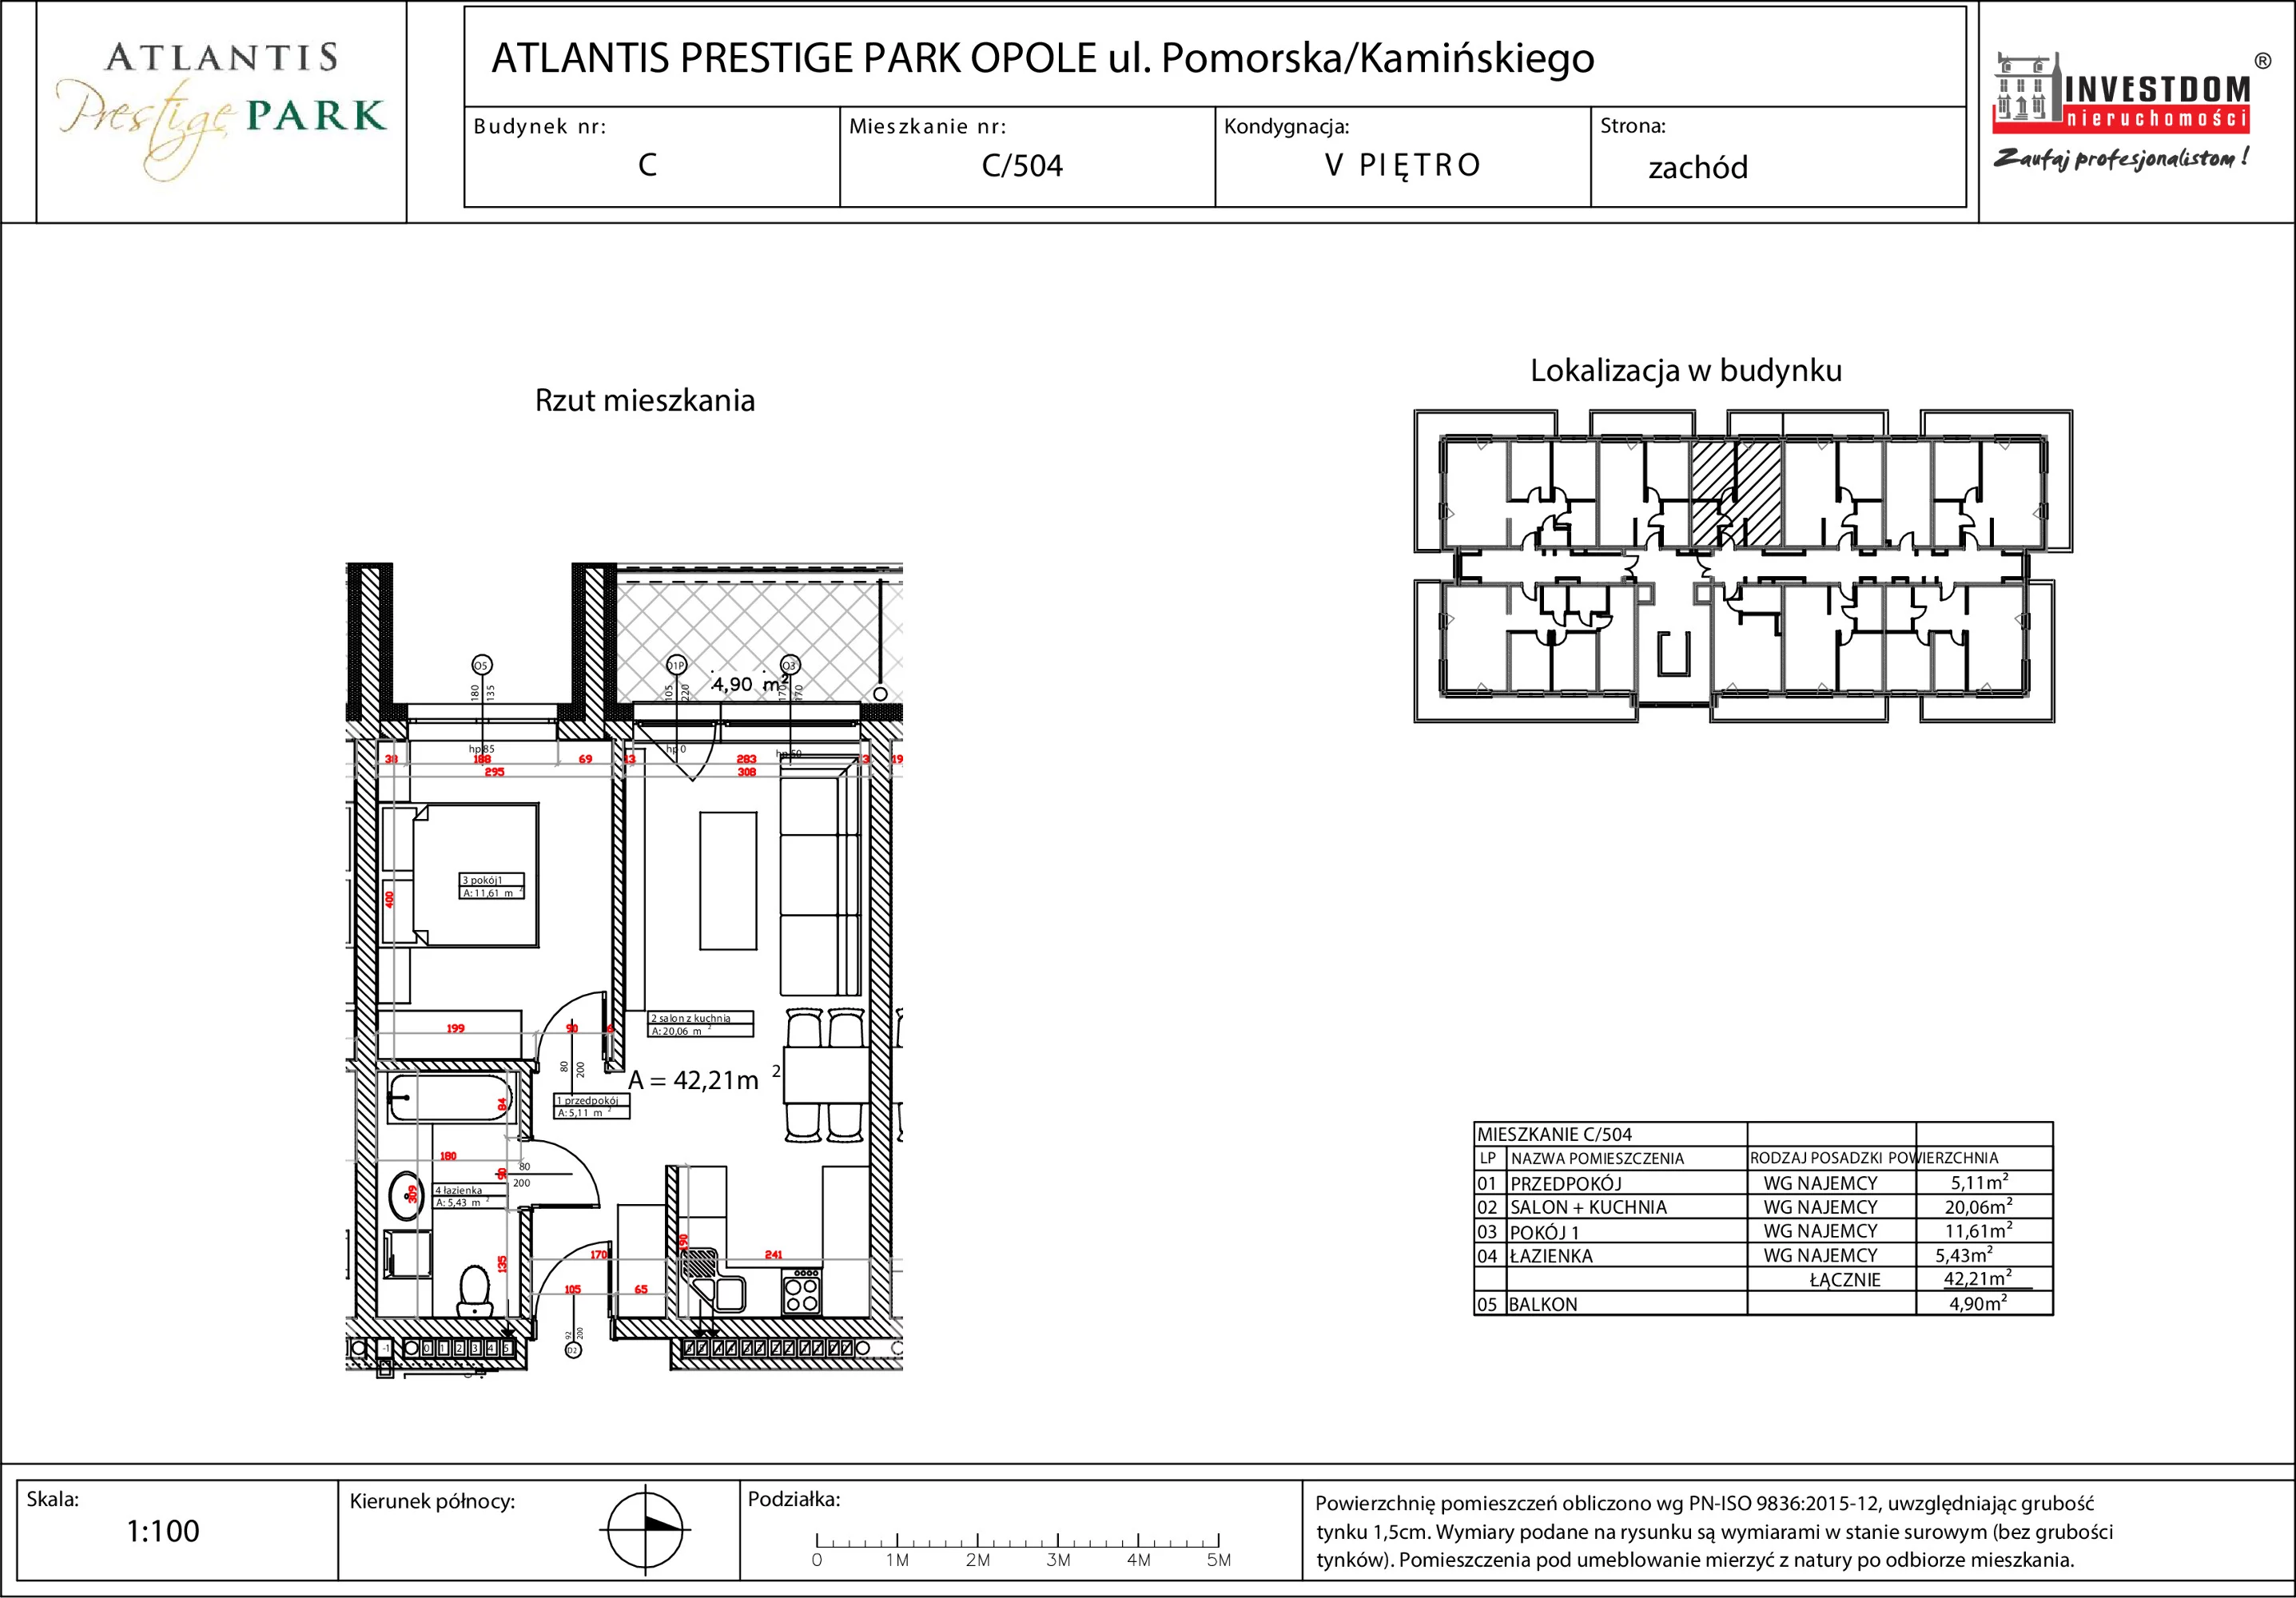 Apartament 42,21 m², piętro 5, oferta nr C/504, Atlantis Prestige Park, Opole, Malinka, ul. Pomorska / Zielonogórska / Harcmistrza Kamińskiego